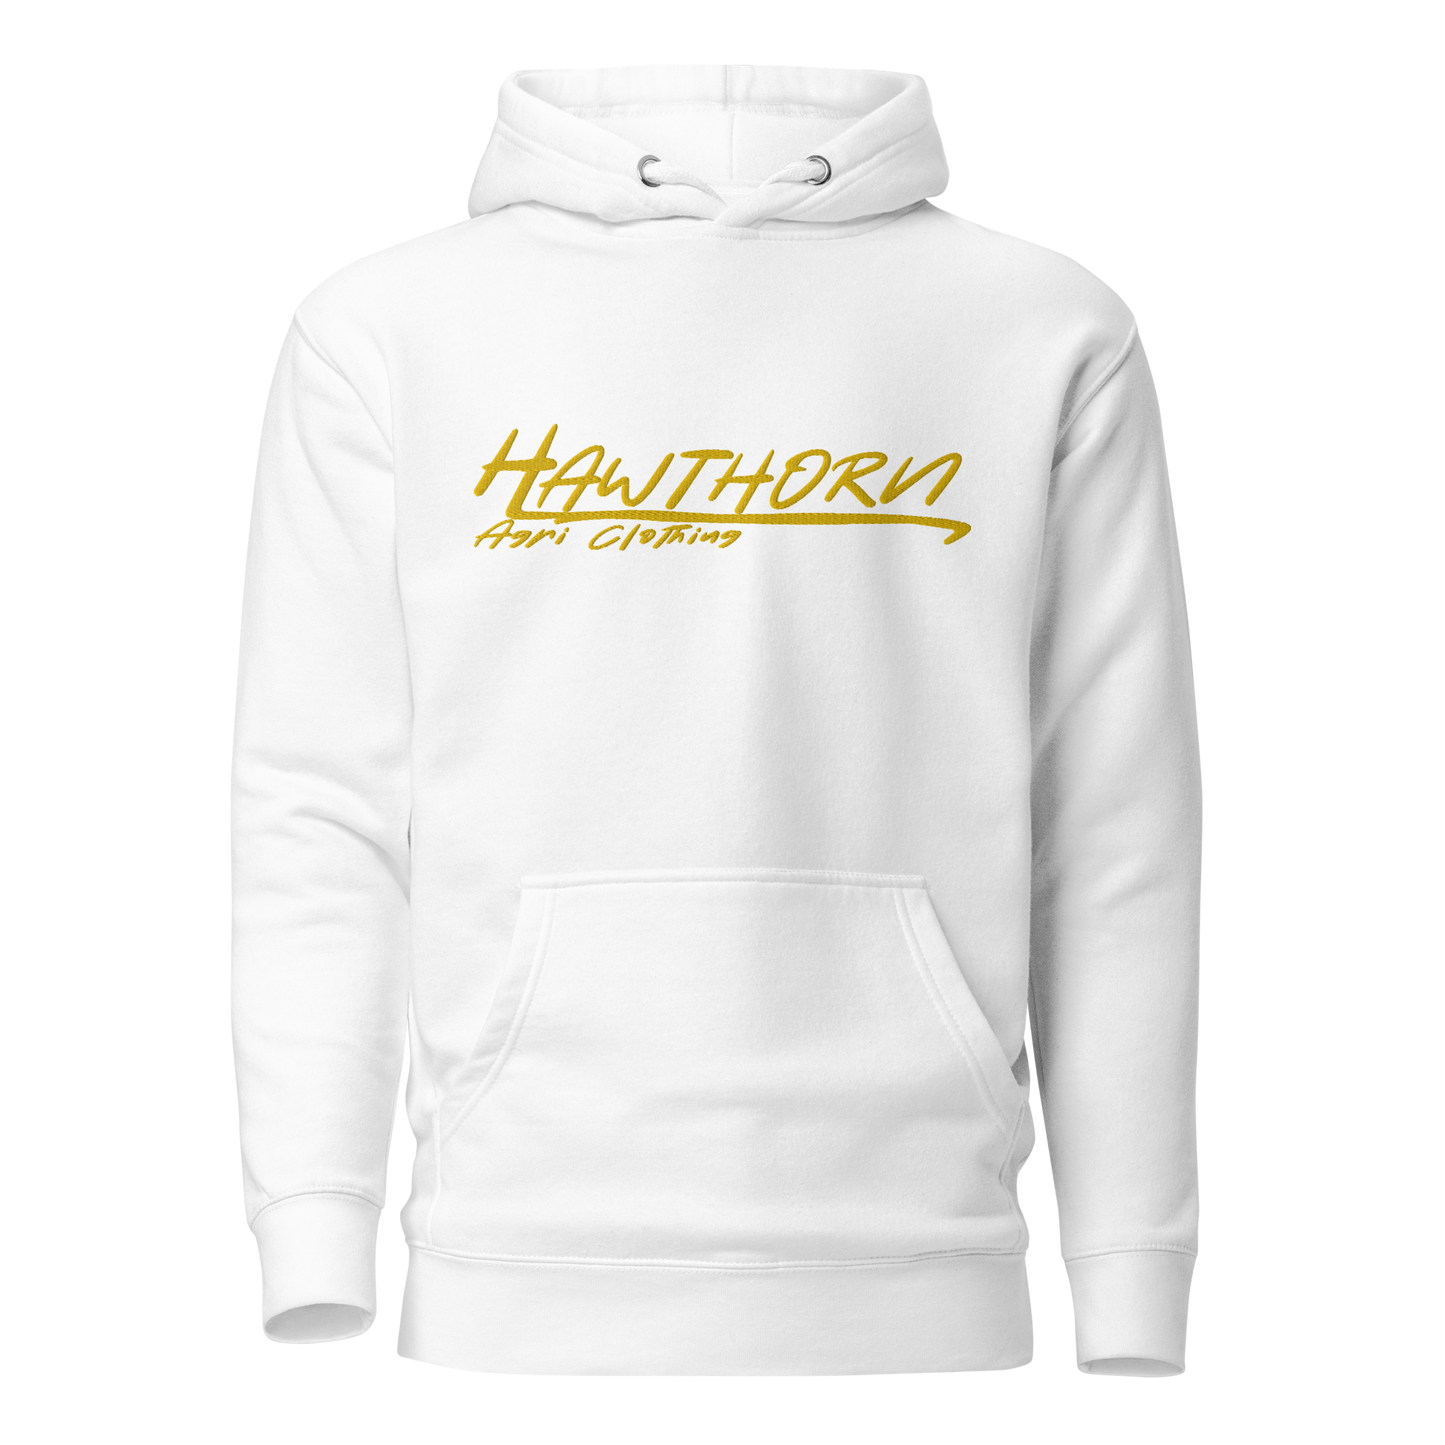 Hawthorn Agri Clothing Hooded Sweatshirt